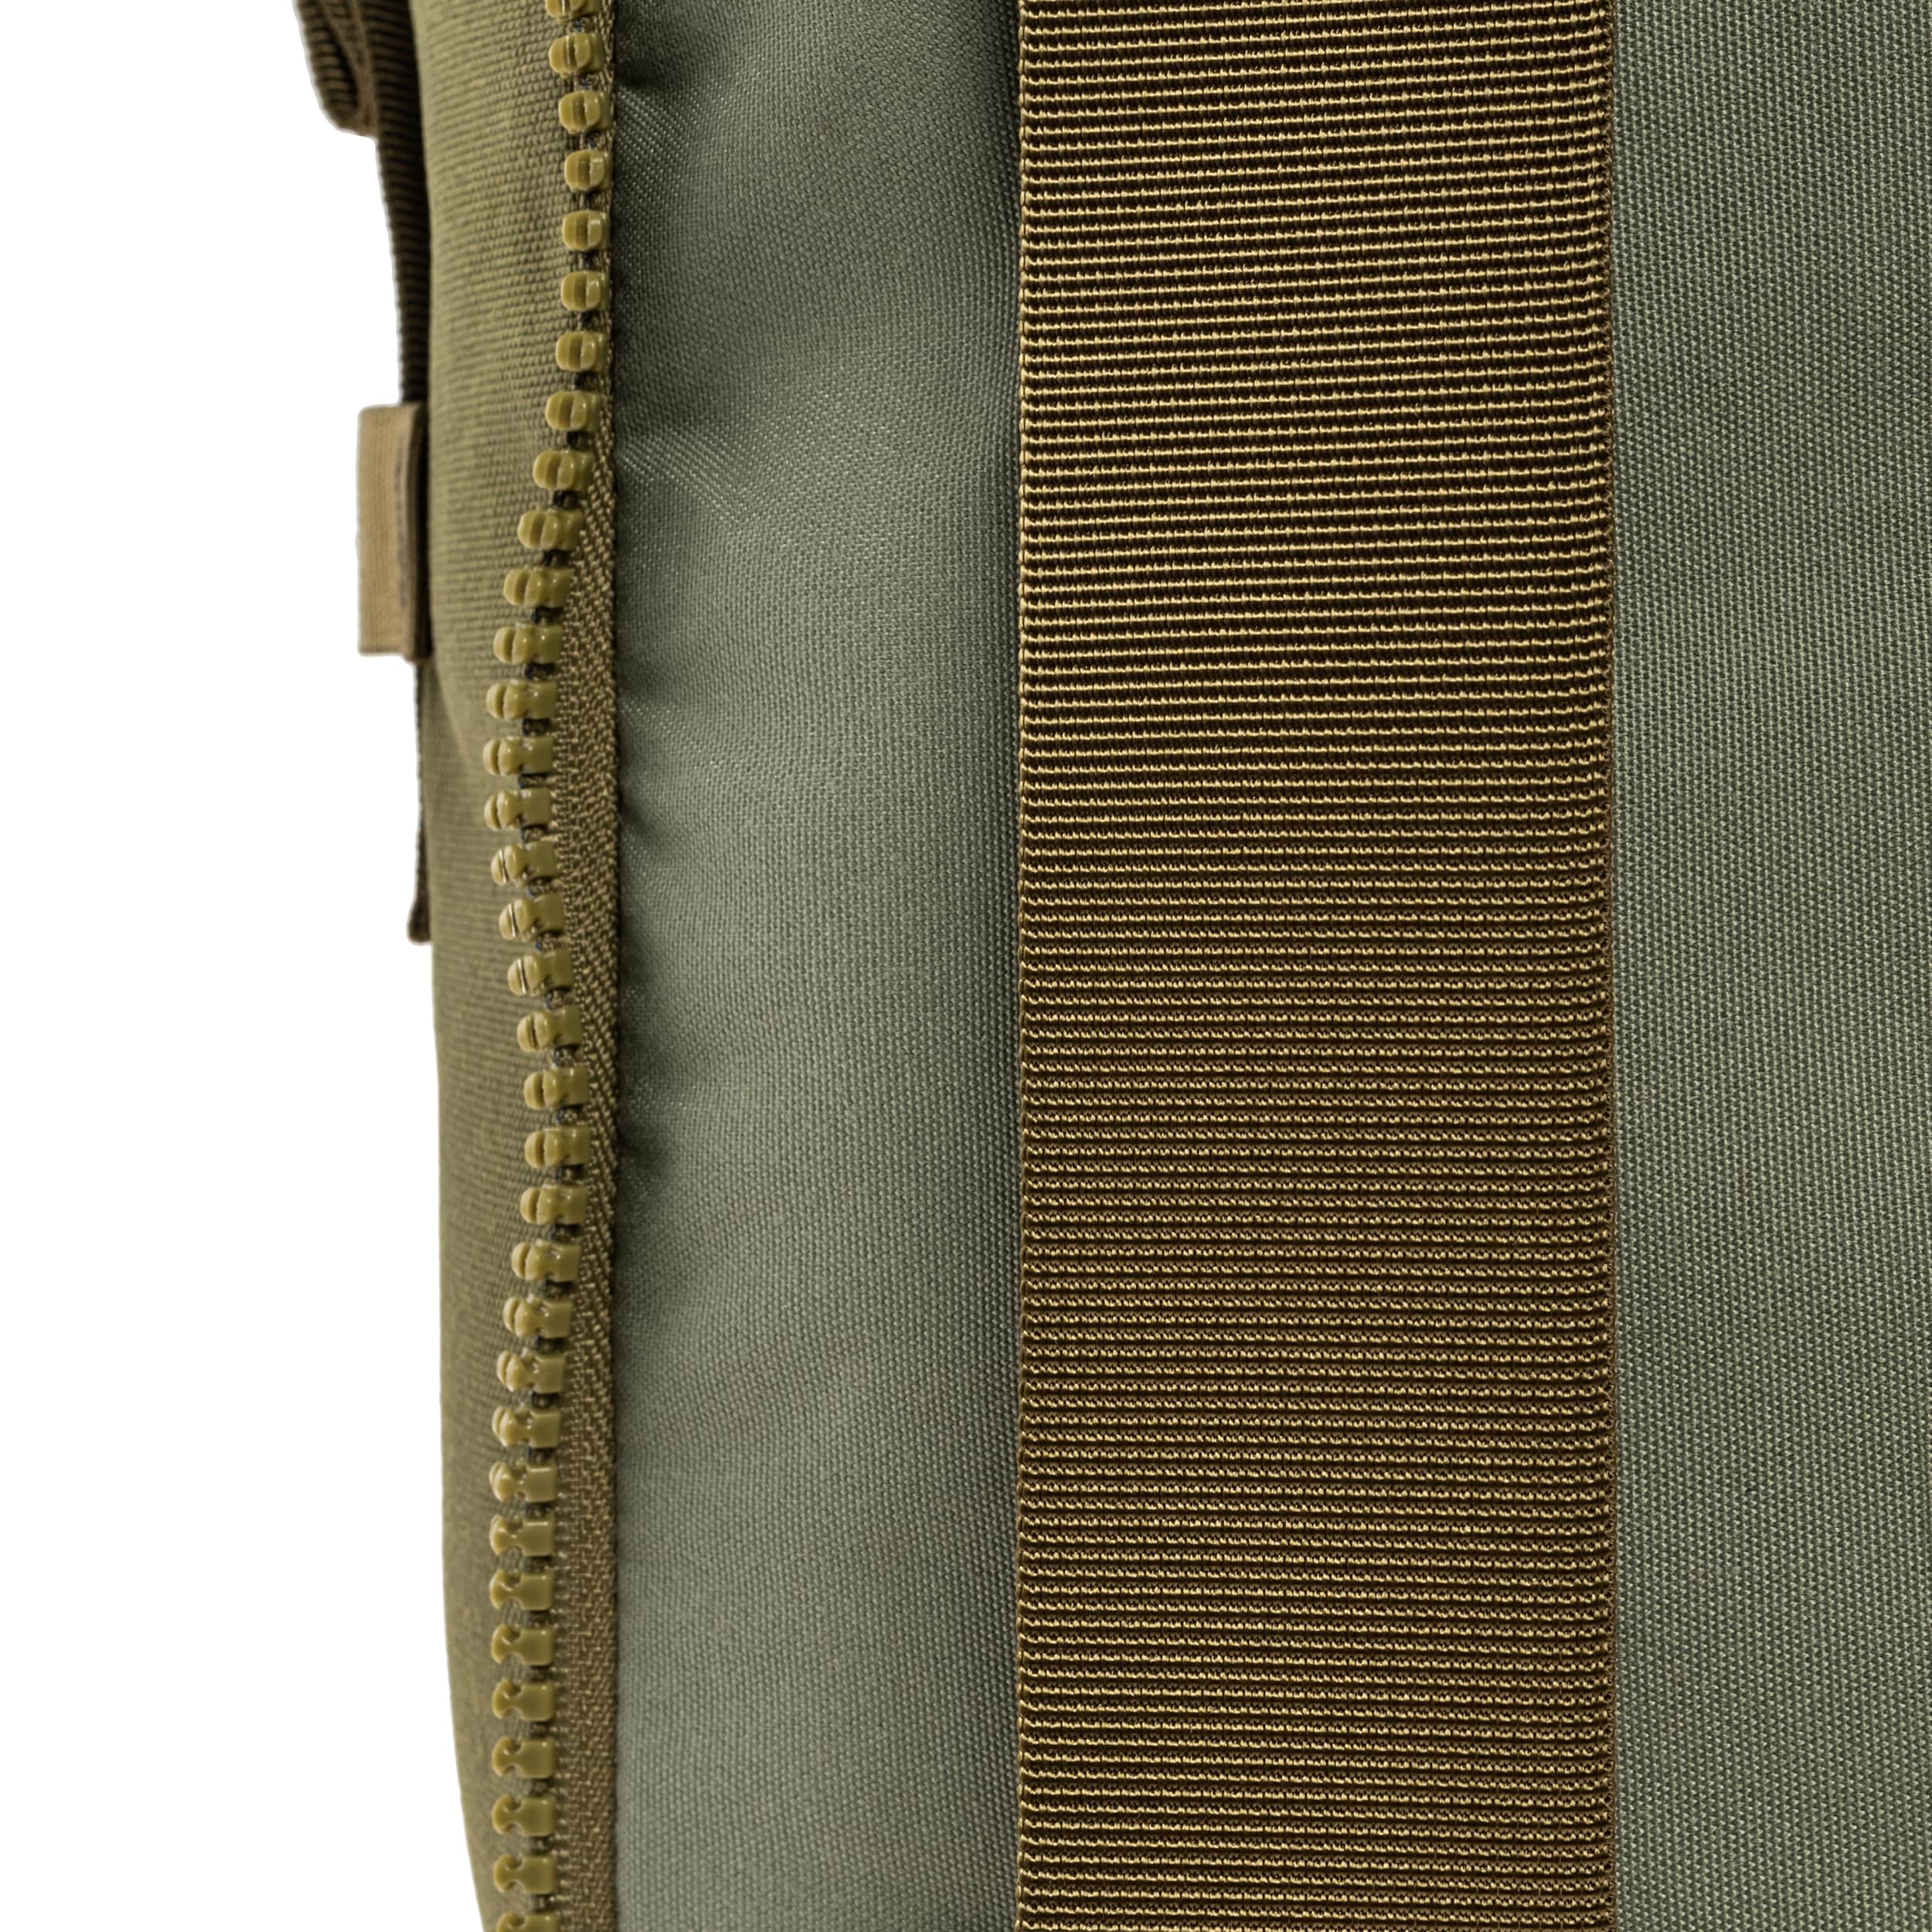 Plecak Berghaus Tactical SMPS Foldable Daypack III 35 l - Cedar